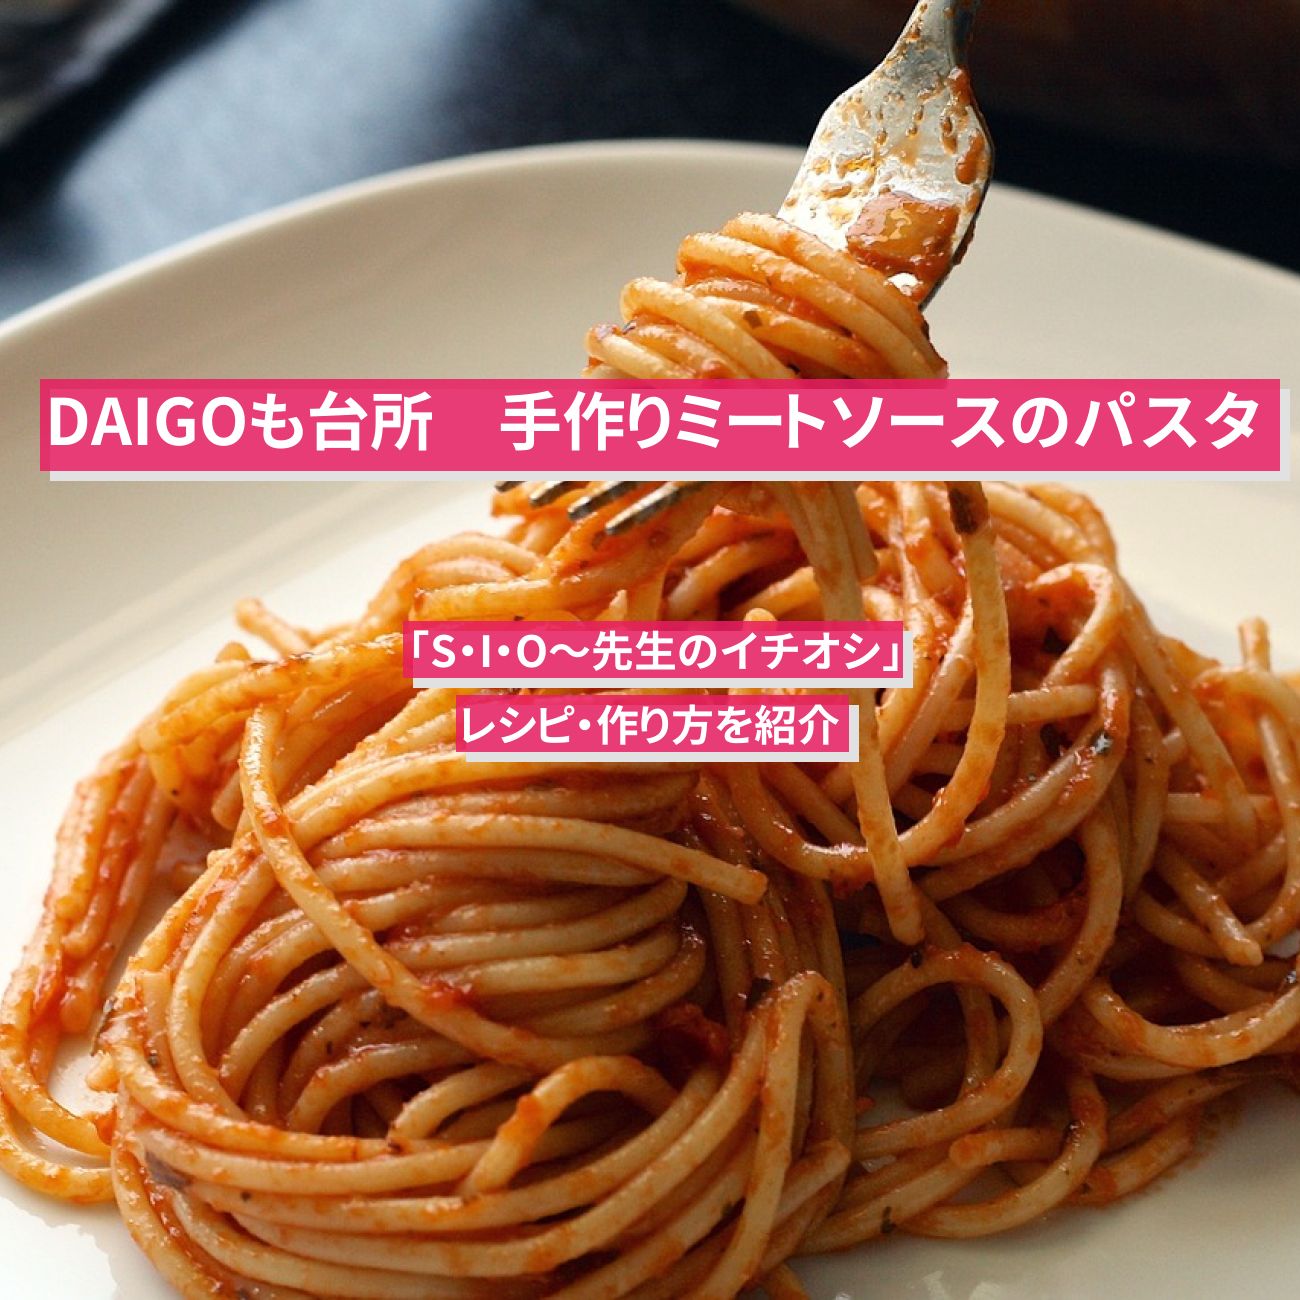 【DAIGOも台所】『手作りミートソースのパスタ』のレシピ・作り方を紹介